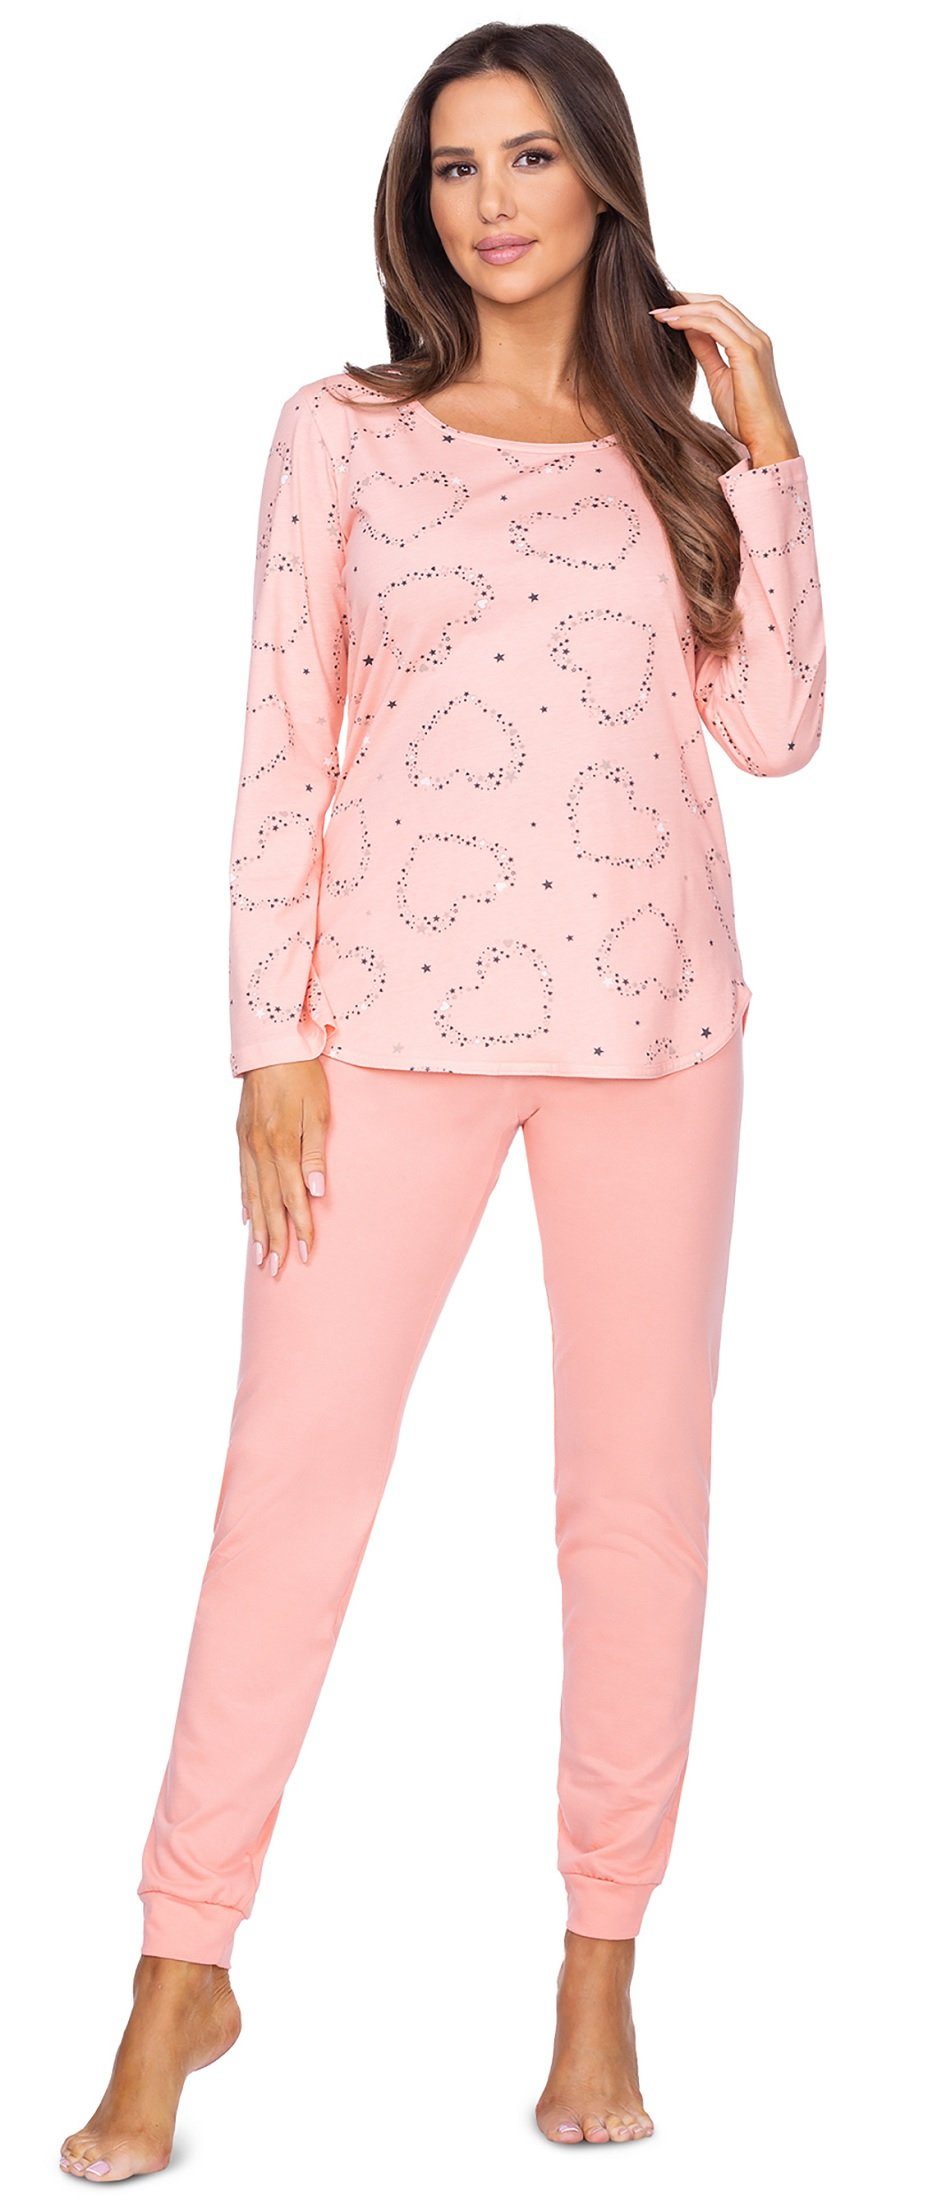 REGINA Schlafanzug langarm, Pyjama - niedliches Herzmotiv aprikose